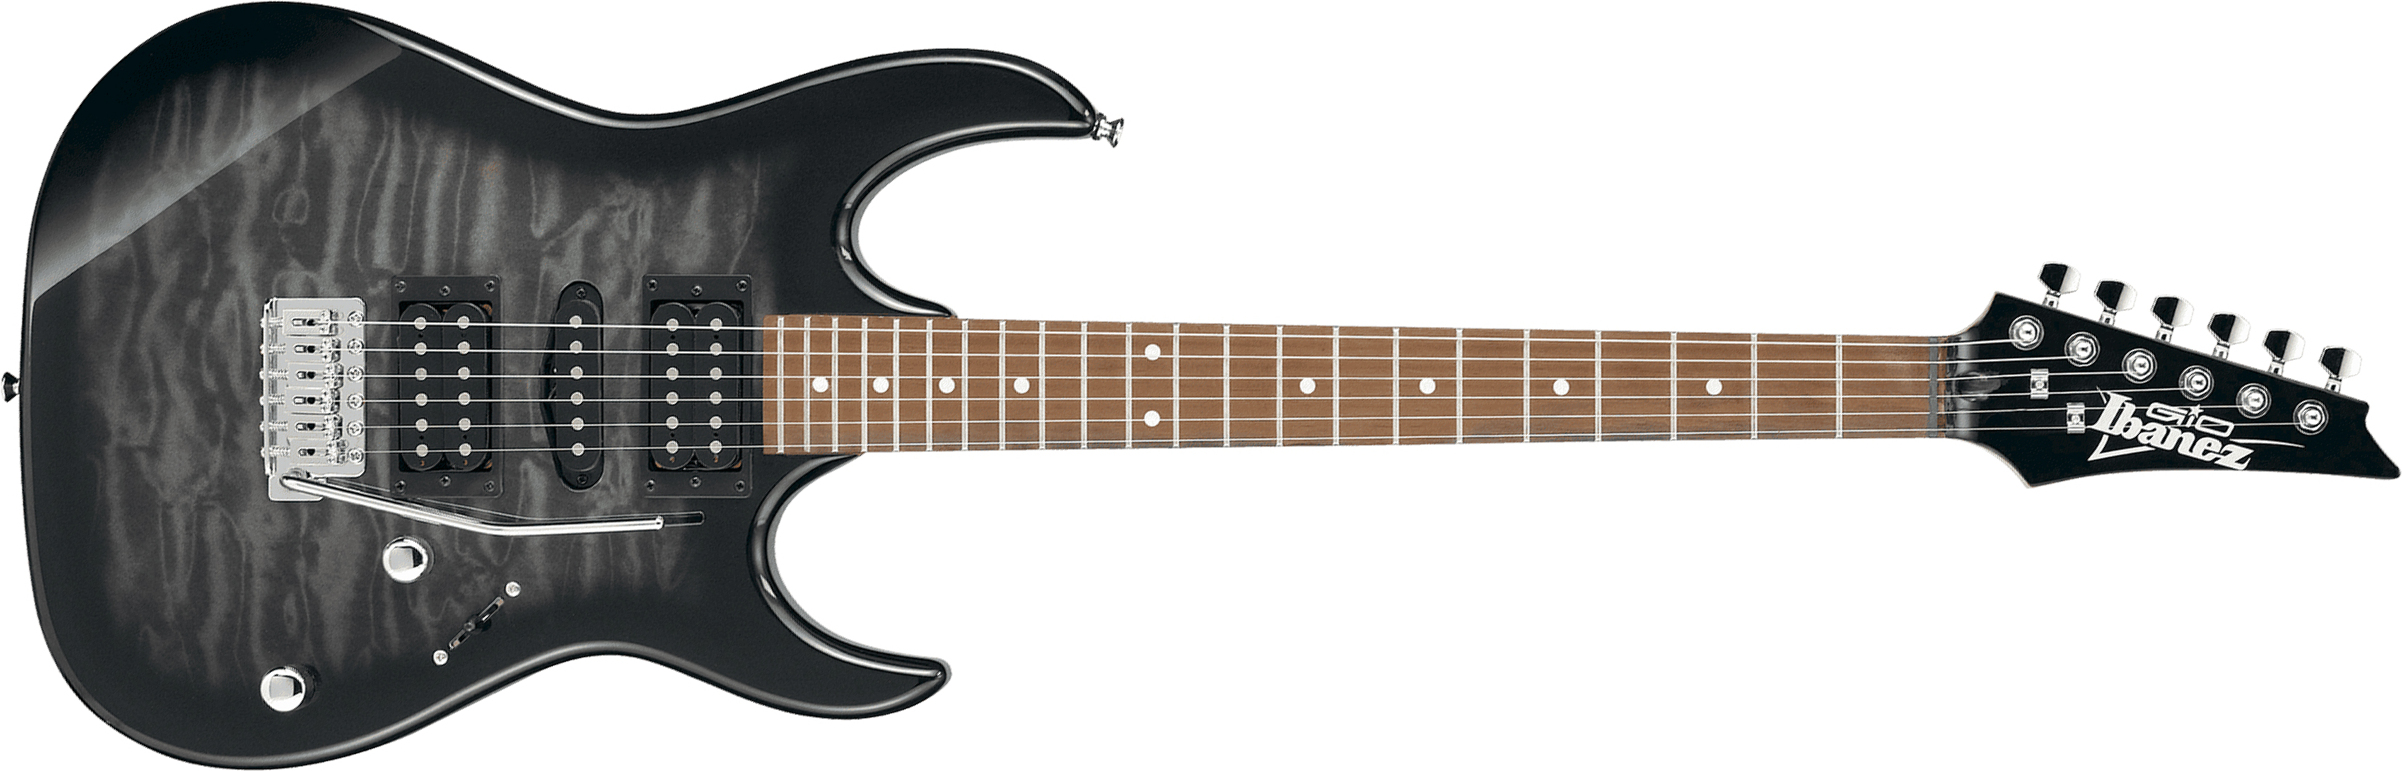 Ibanez Grx70qa Tks Gio Hsh Trem Nzp - Transparent Black Sunburst - E-Gitarre in Str-Form - Main picture